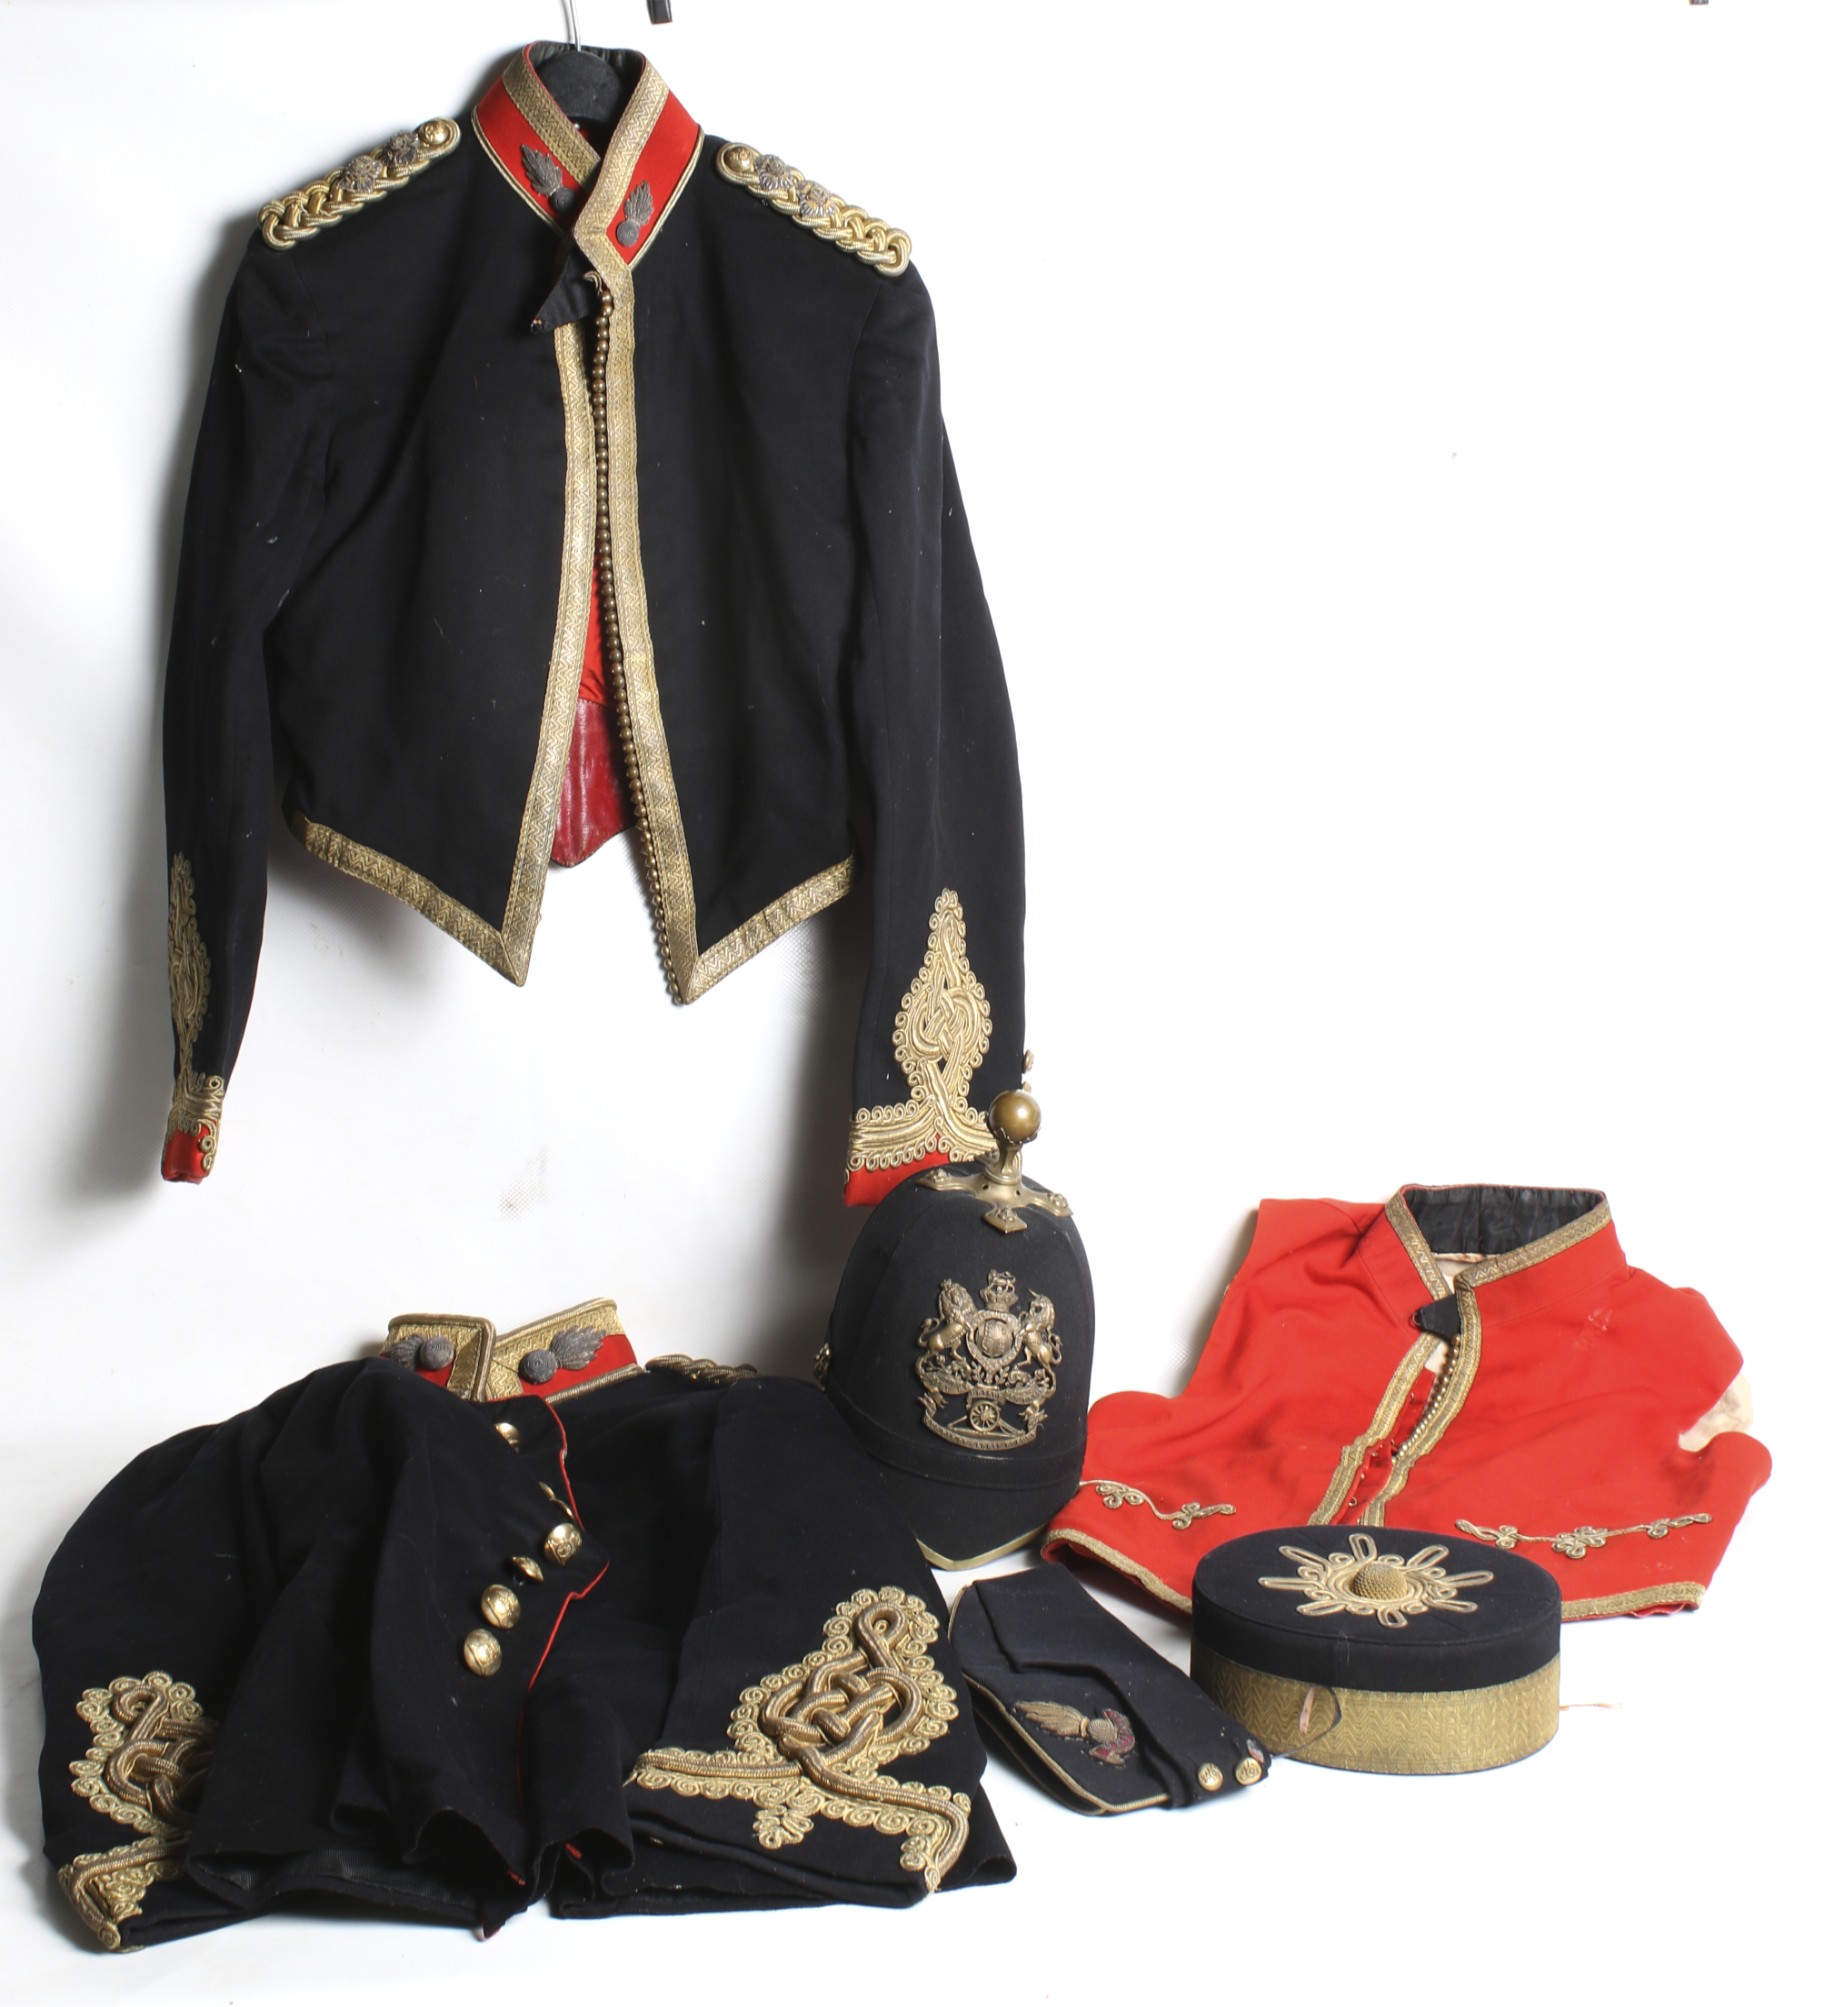 Brigadier Johnson's WWI Royal Artillery full dress tunic (1902-1914).